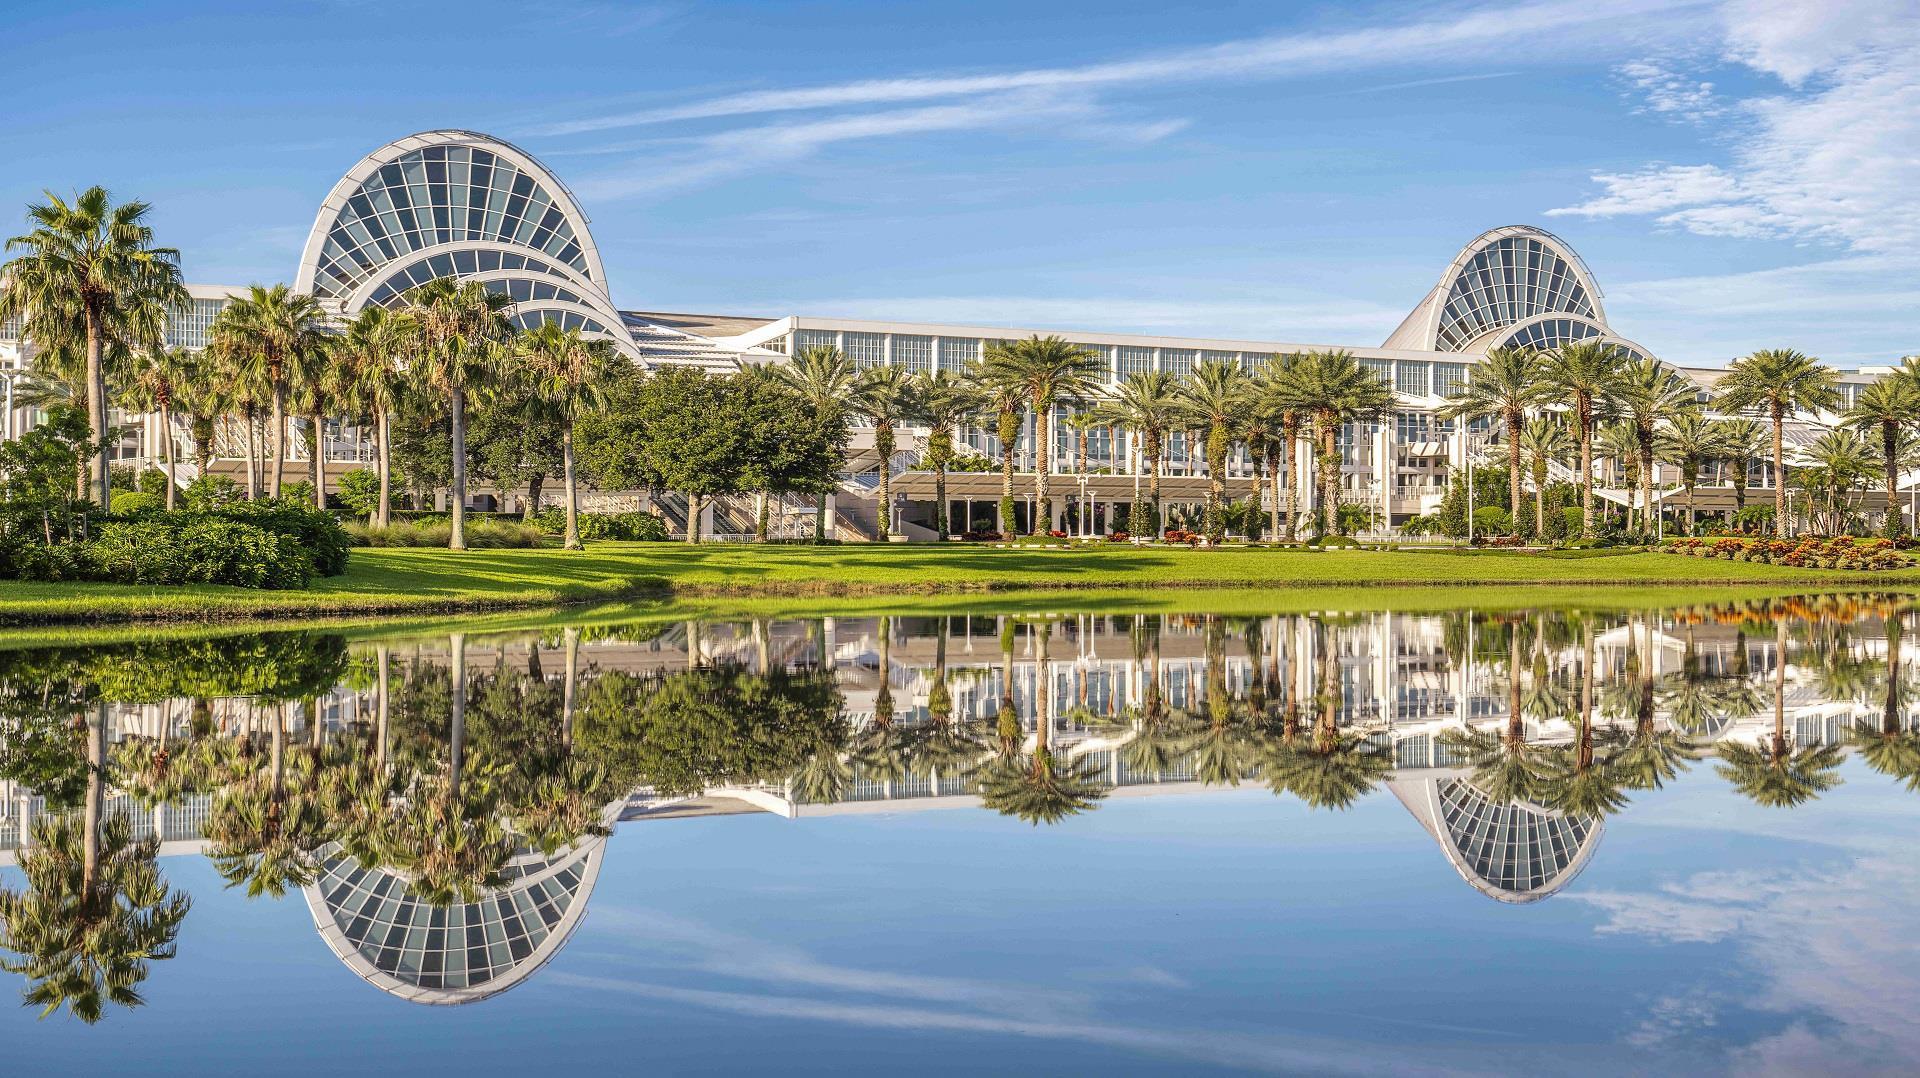 Orange County Convention Center in Orlando, FL